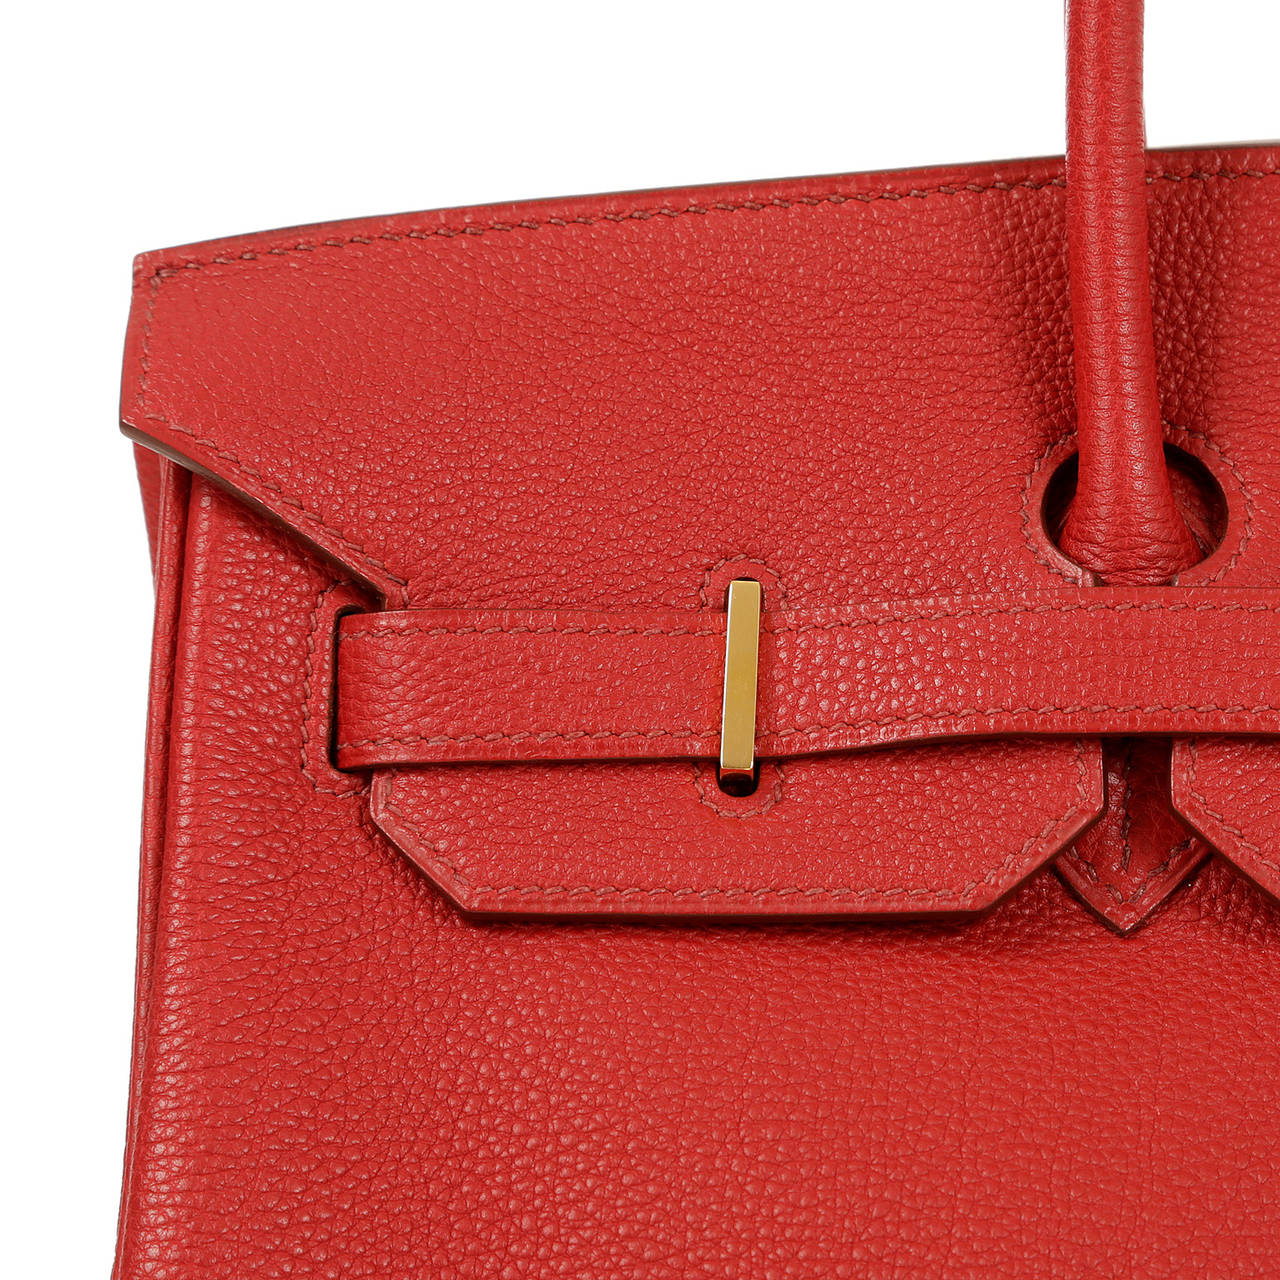 Hermes Red Leather 35 cm Birkin Bag- RED TOGO with GOLD hardware at 1stdibs